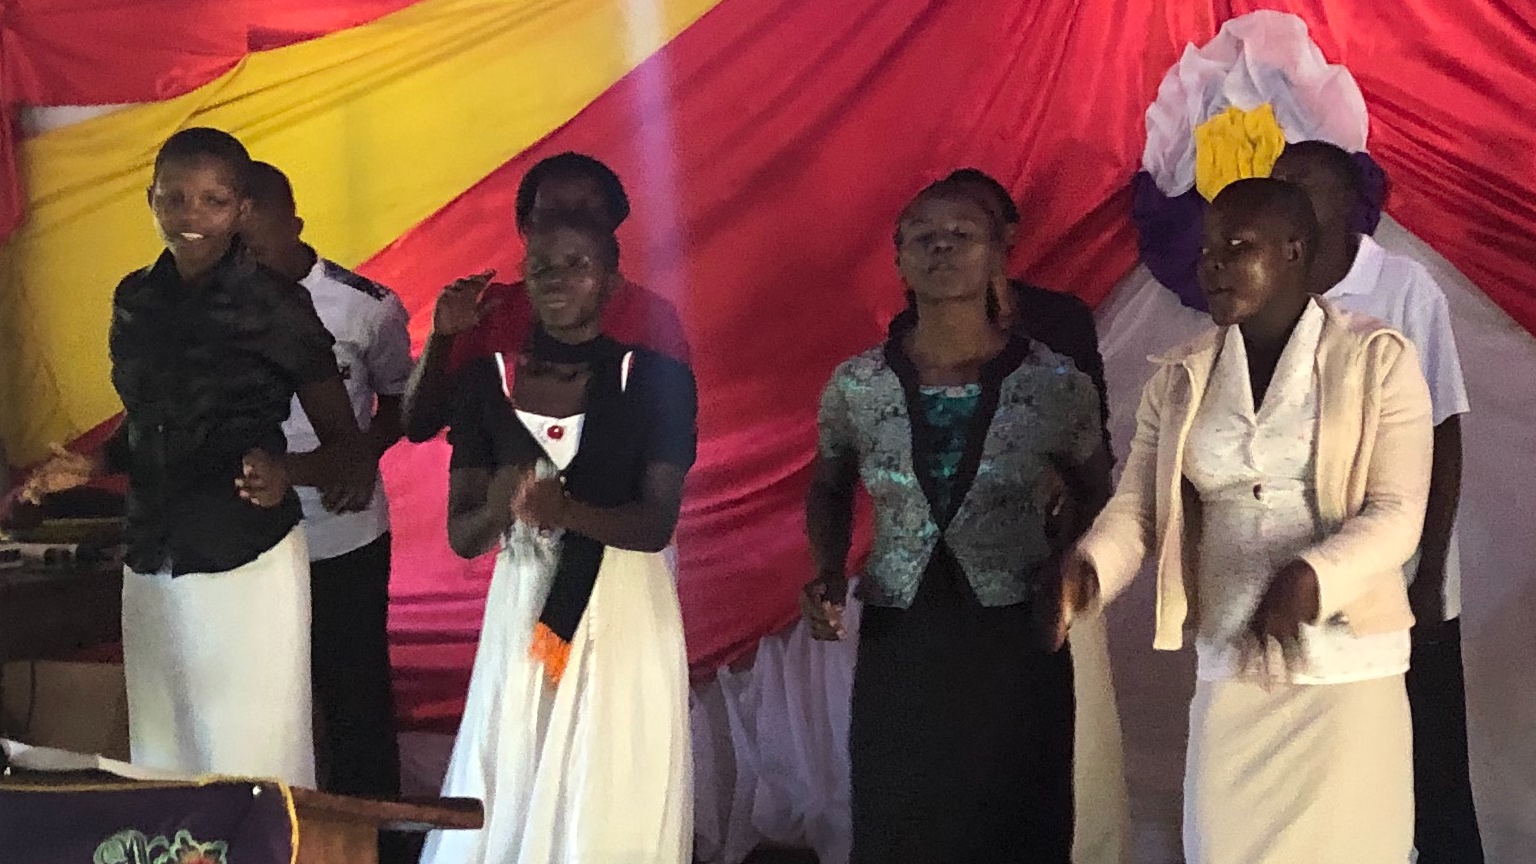 Uganda 102019 church service.jpg